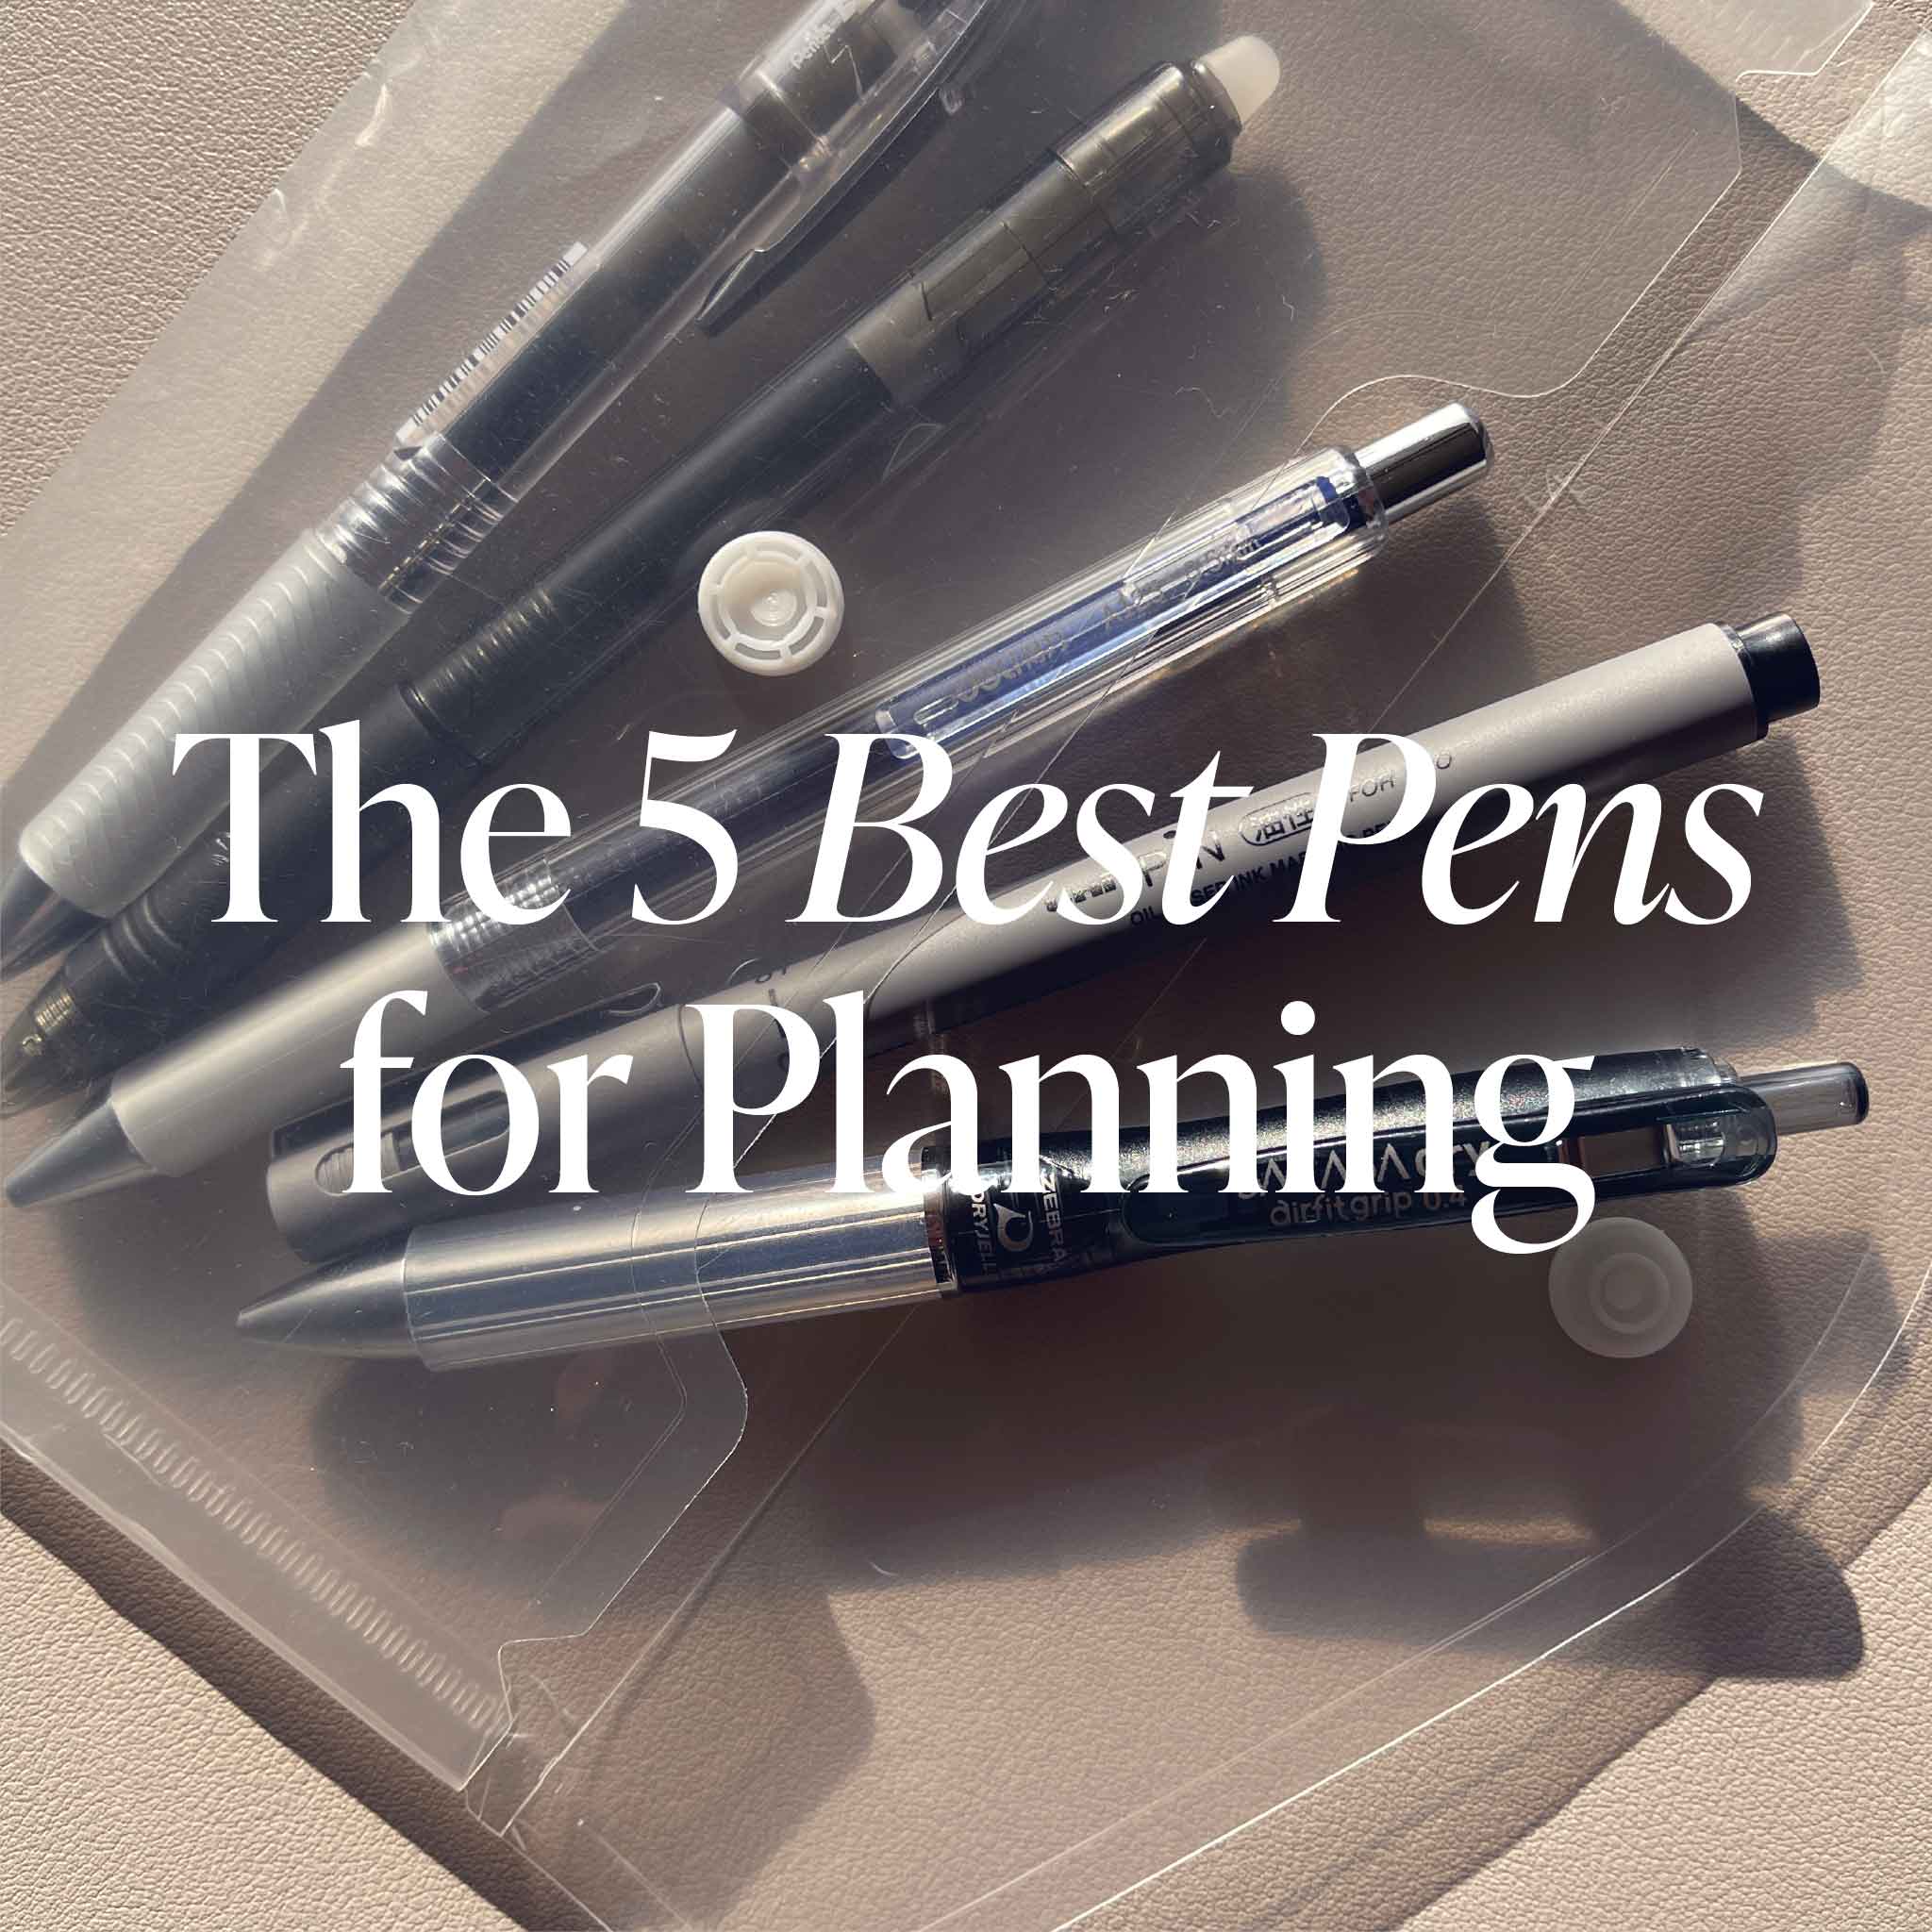 Best Planner Pens  Planner pens, Best planners, Planner writing